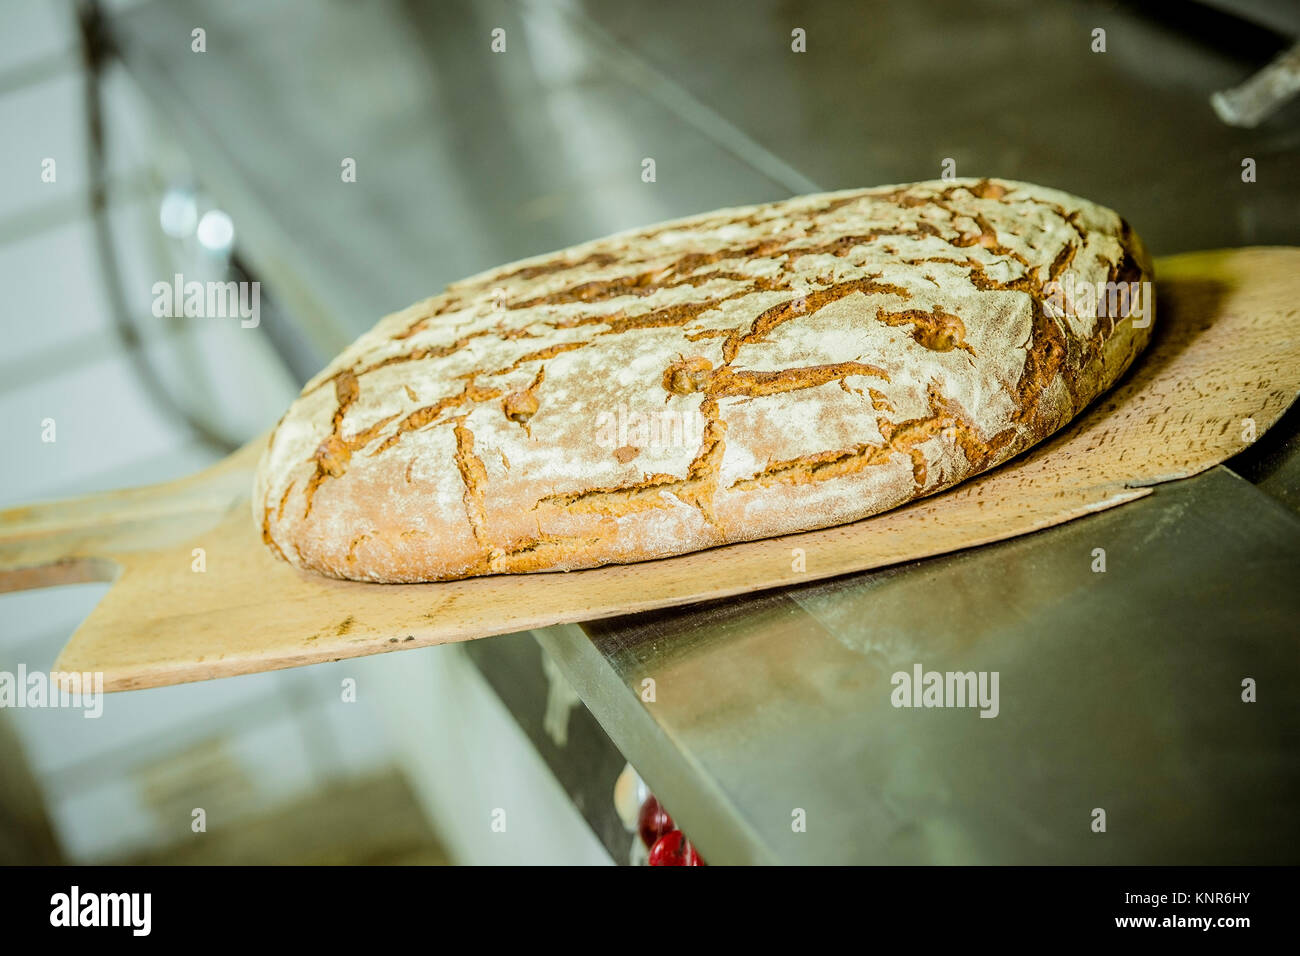 Brot backen, Backstube" - la cottura del pane Foto Stock